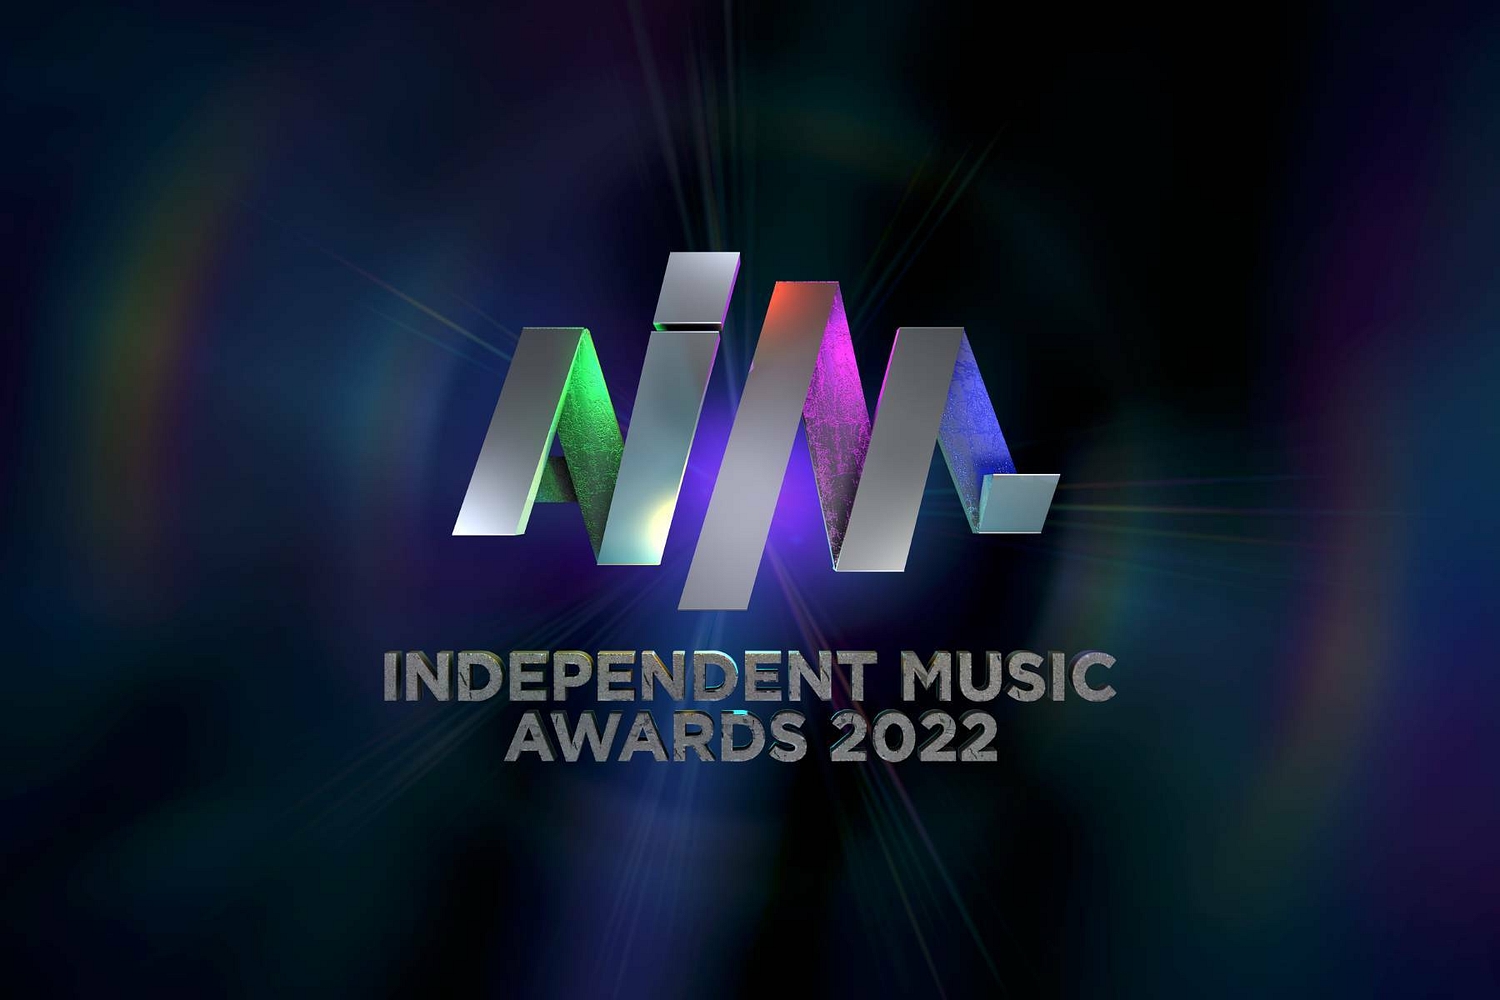 Tracks: An AIM Awards 2022 special